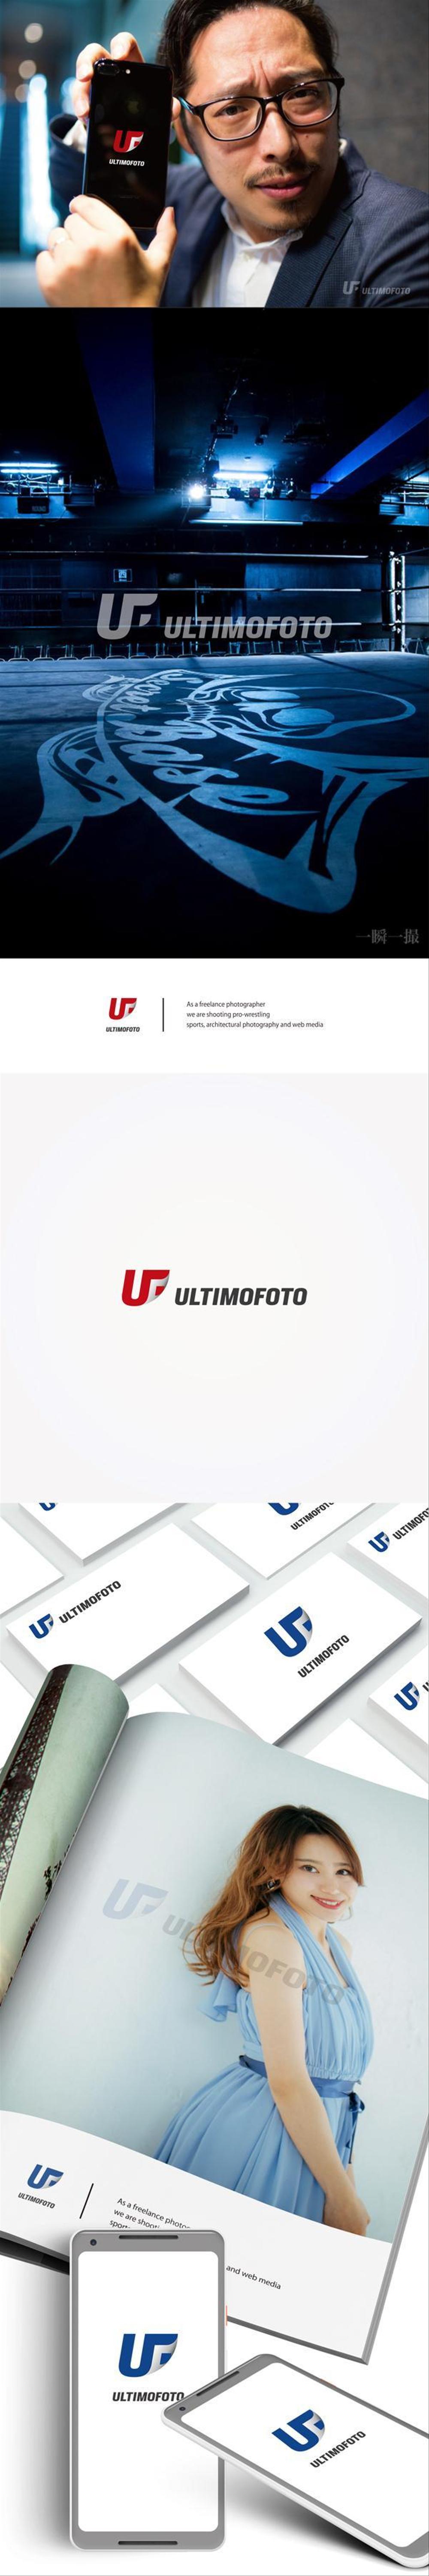 ULTIMOFOTO-01.jpg